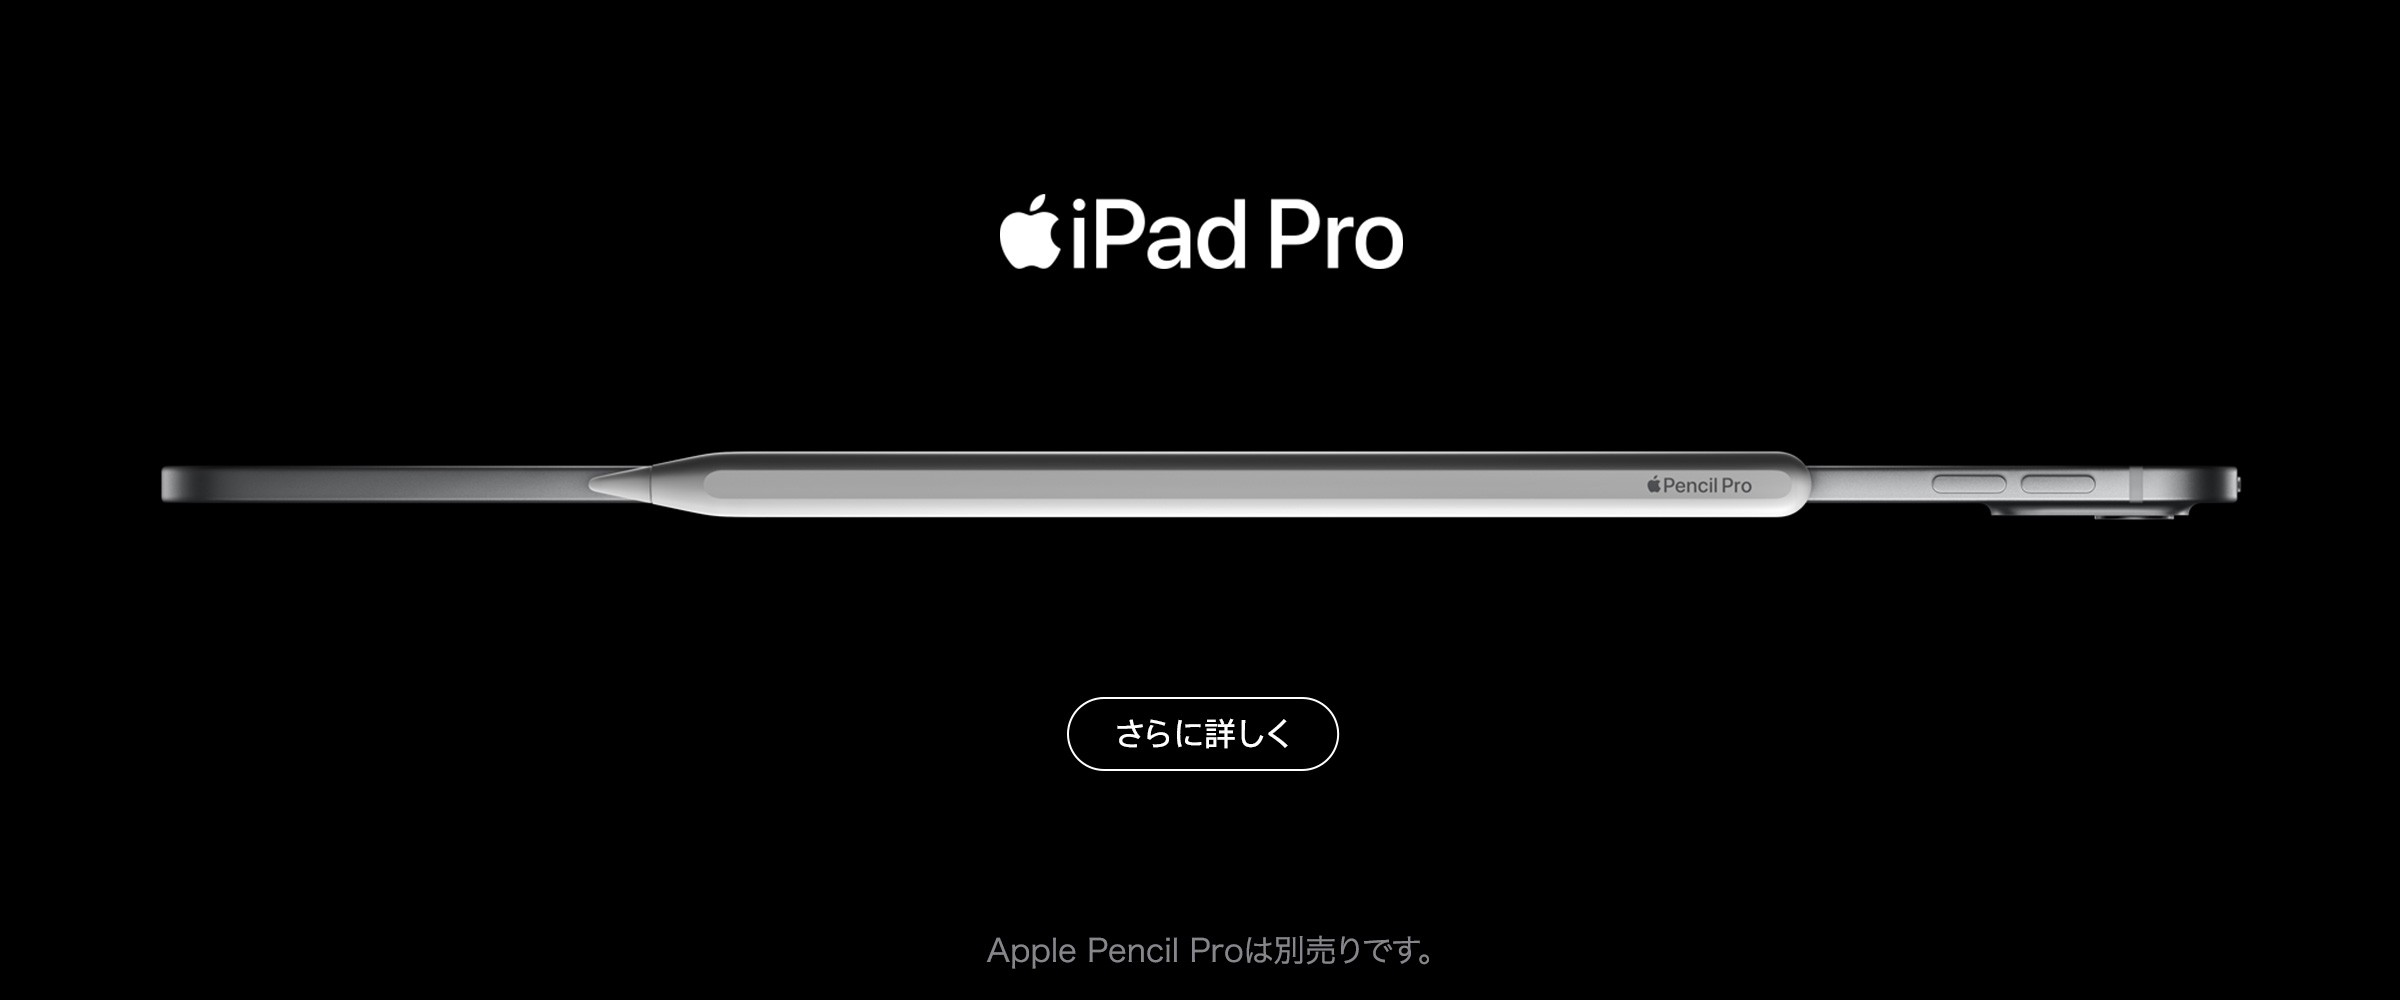 iPad Pro (M4)